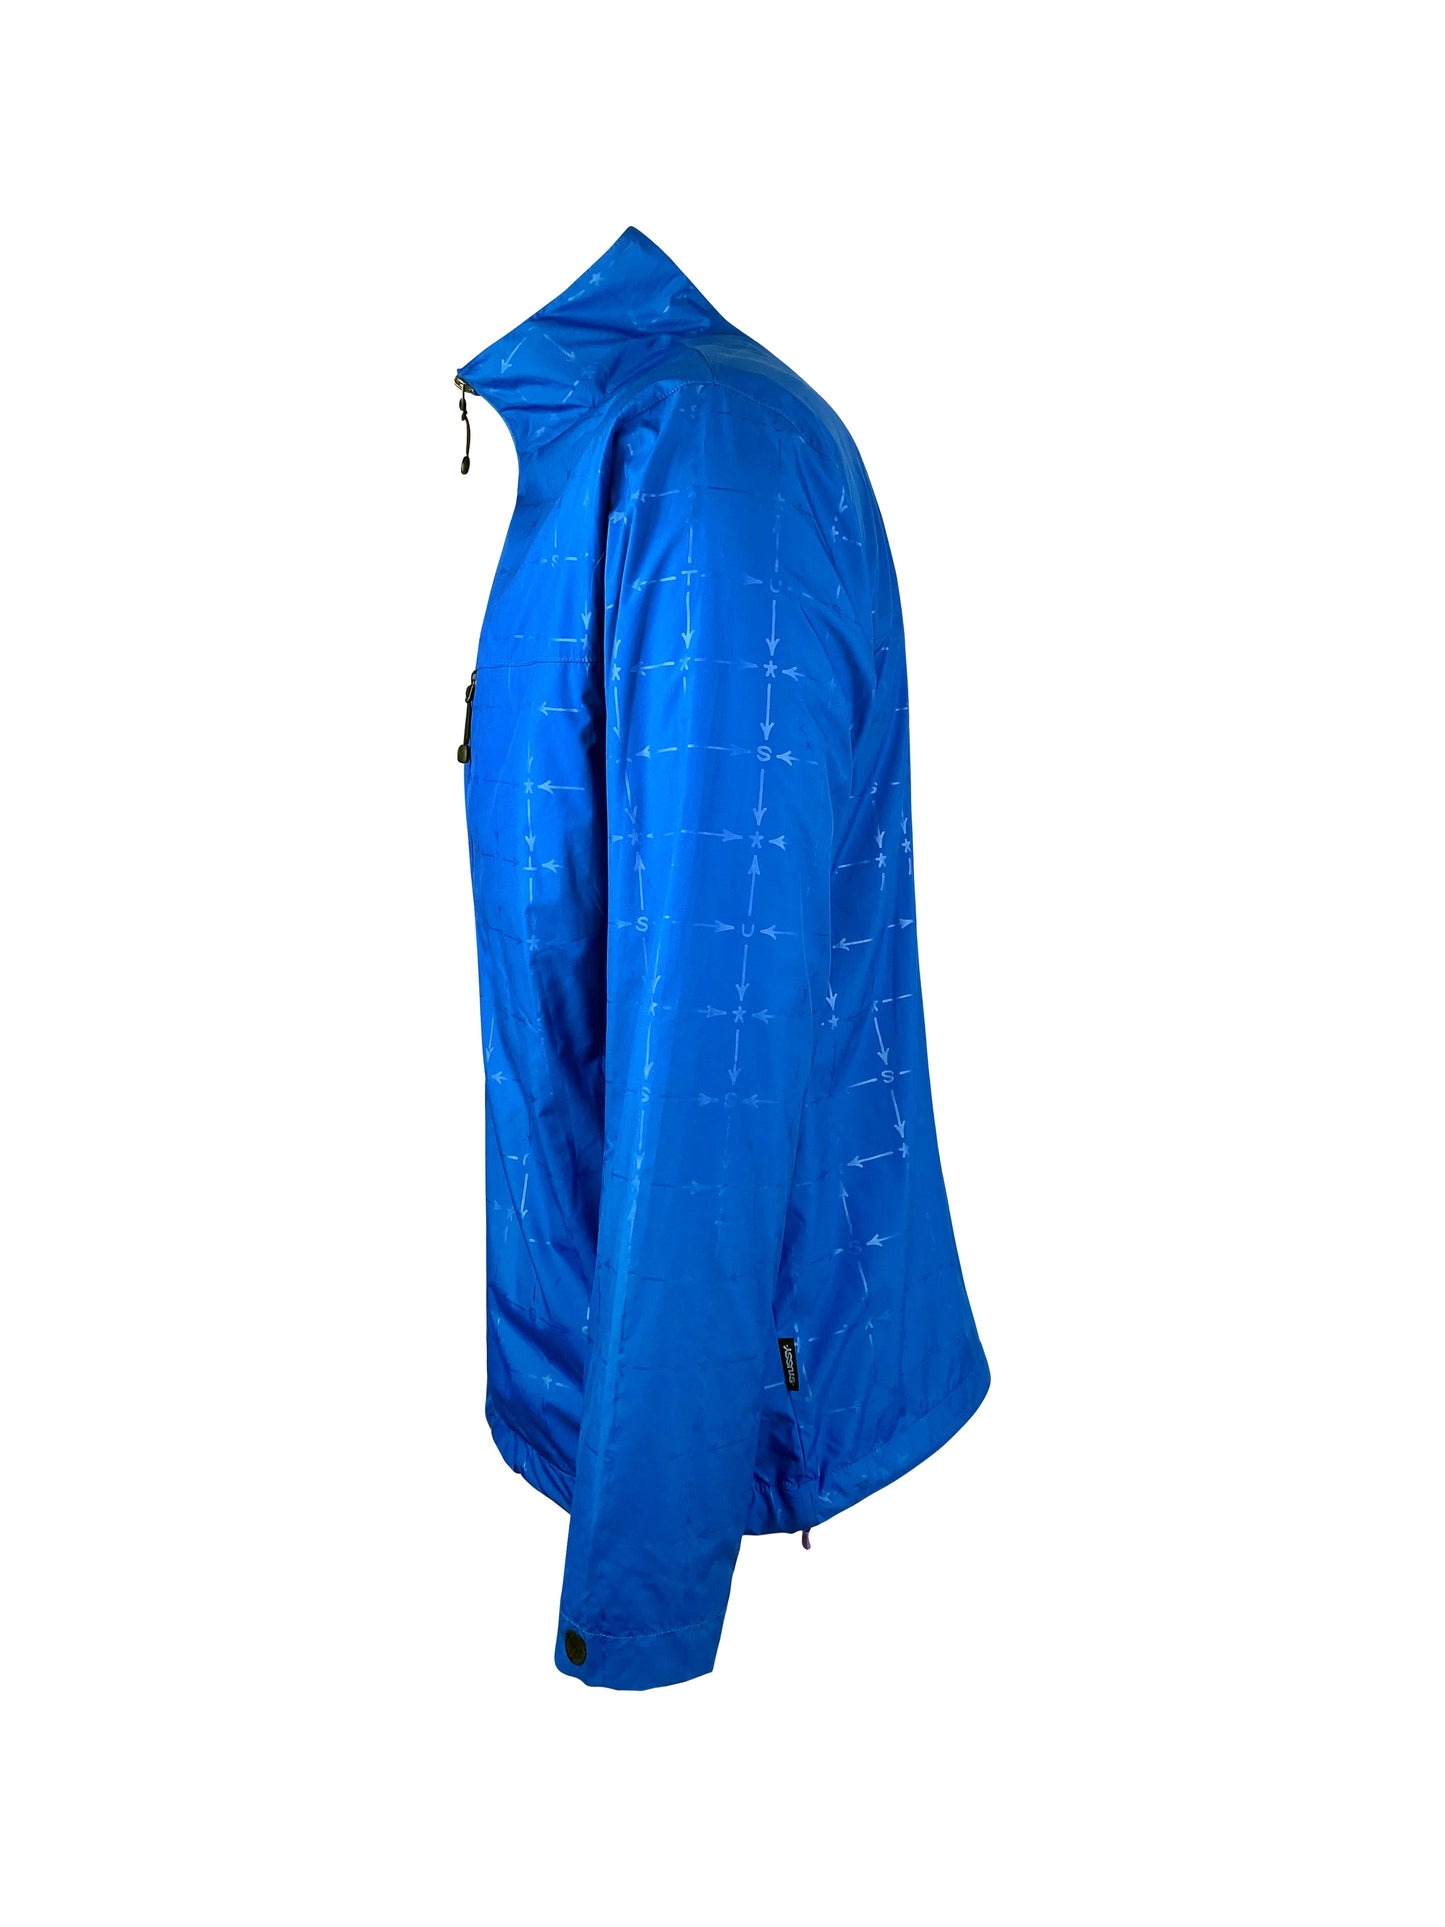 Stüssy Jacket "Gear" - Blue